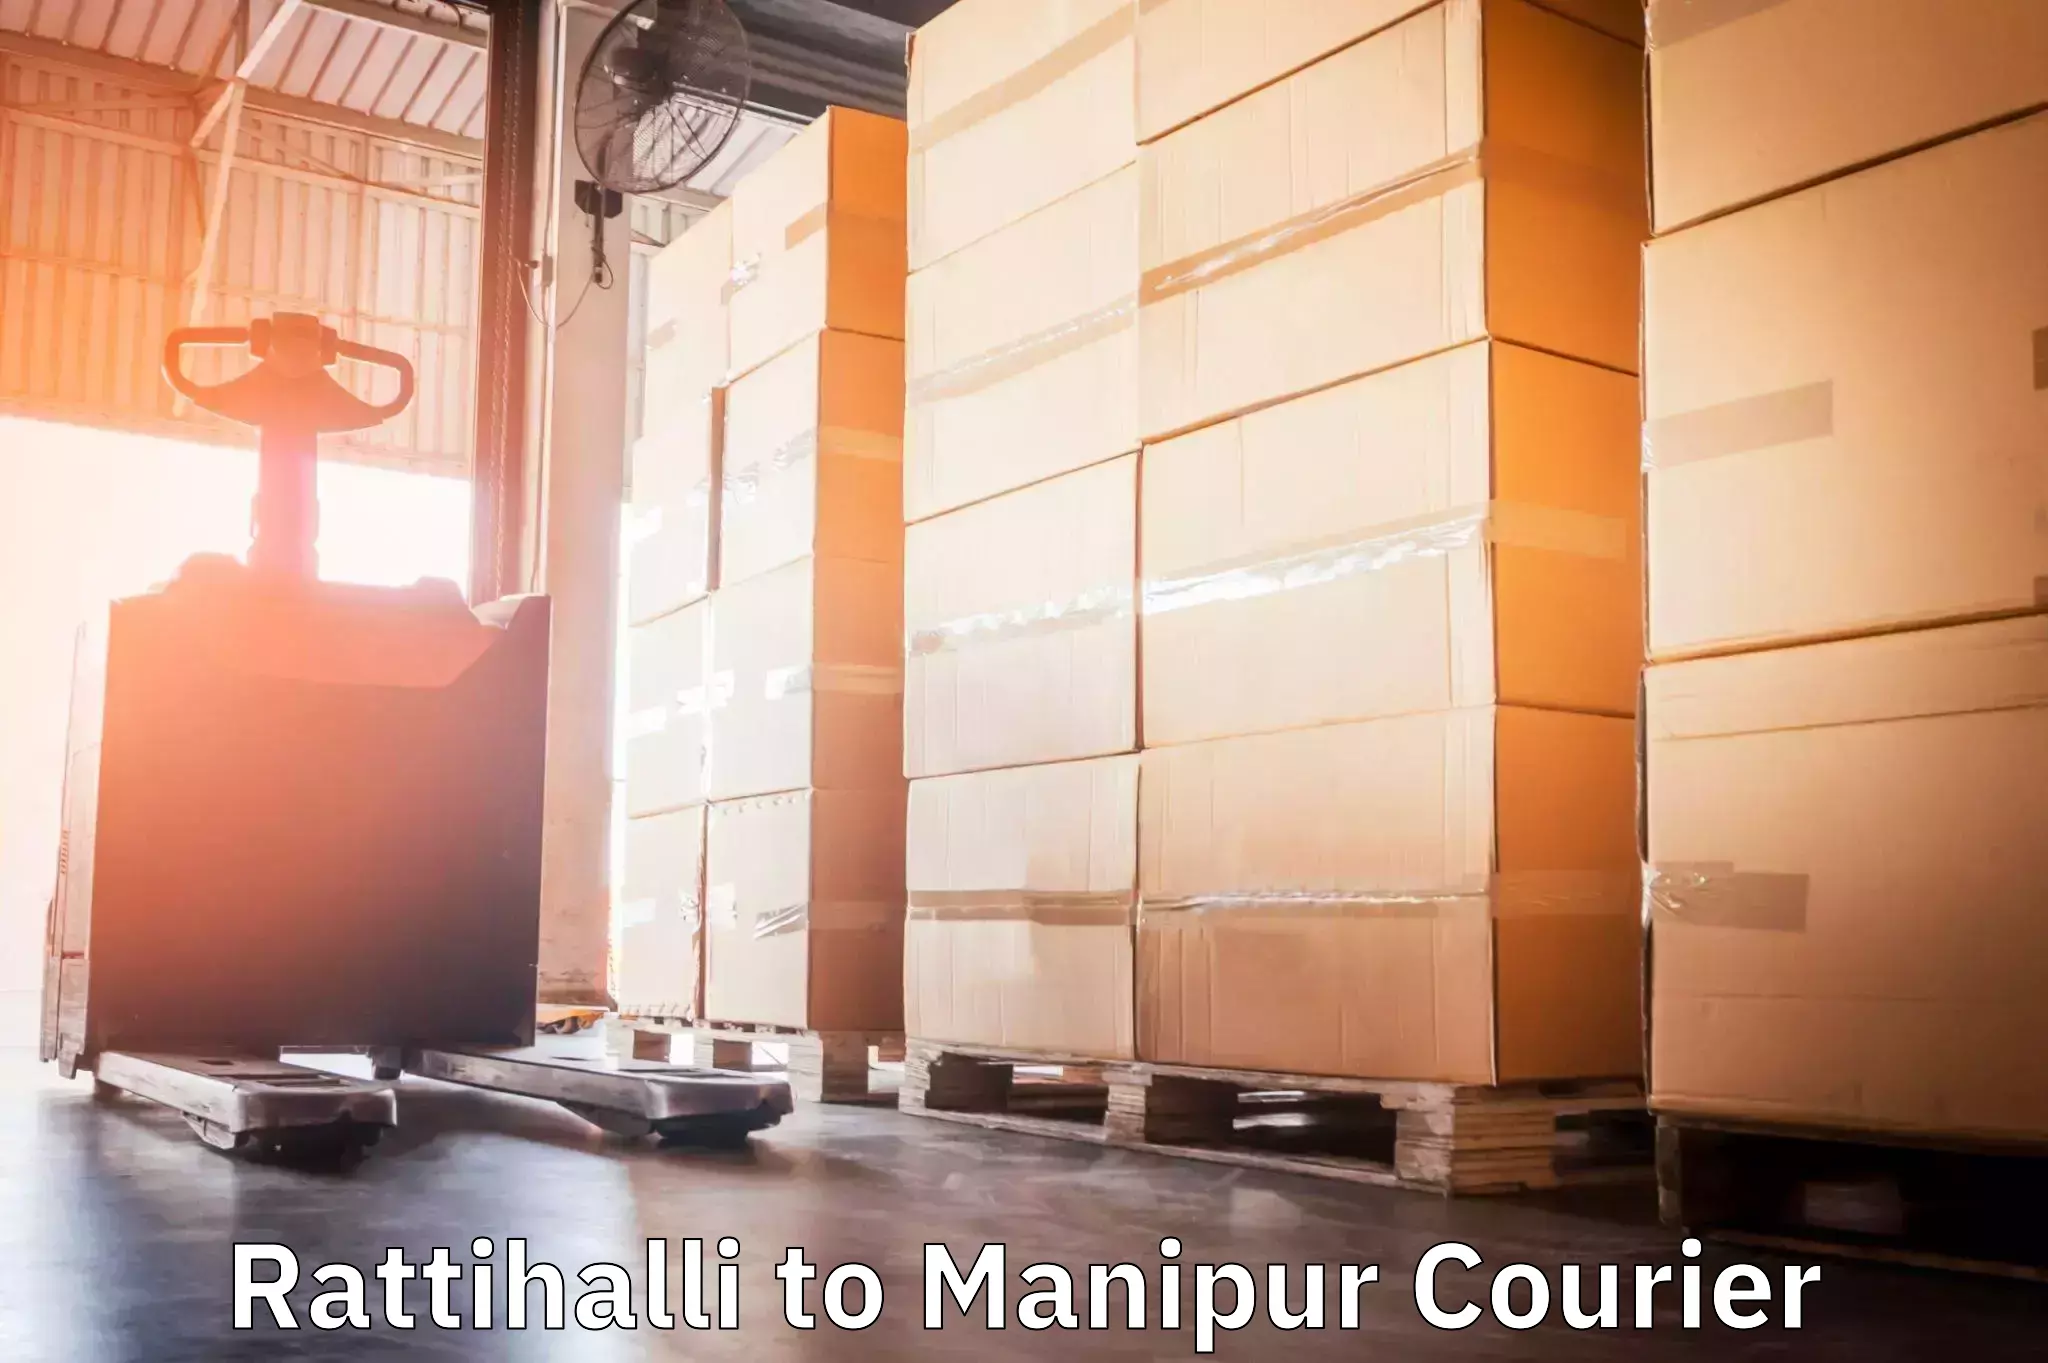 Courier app Rattihalli to Manipur